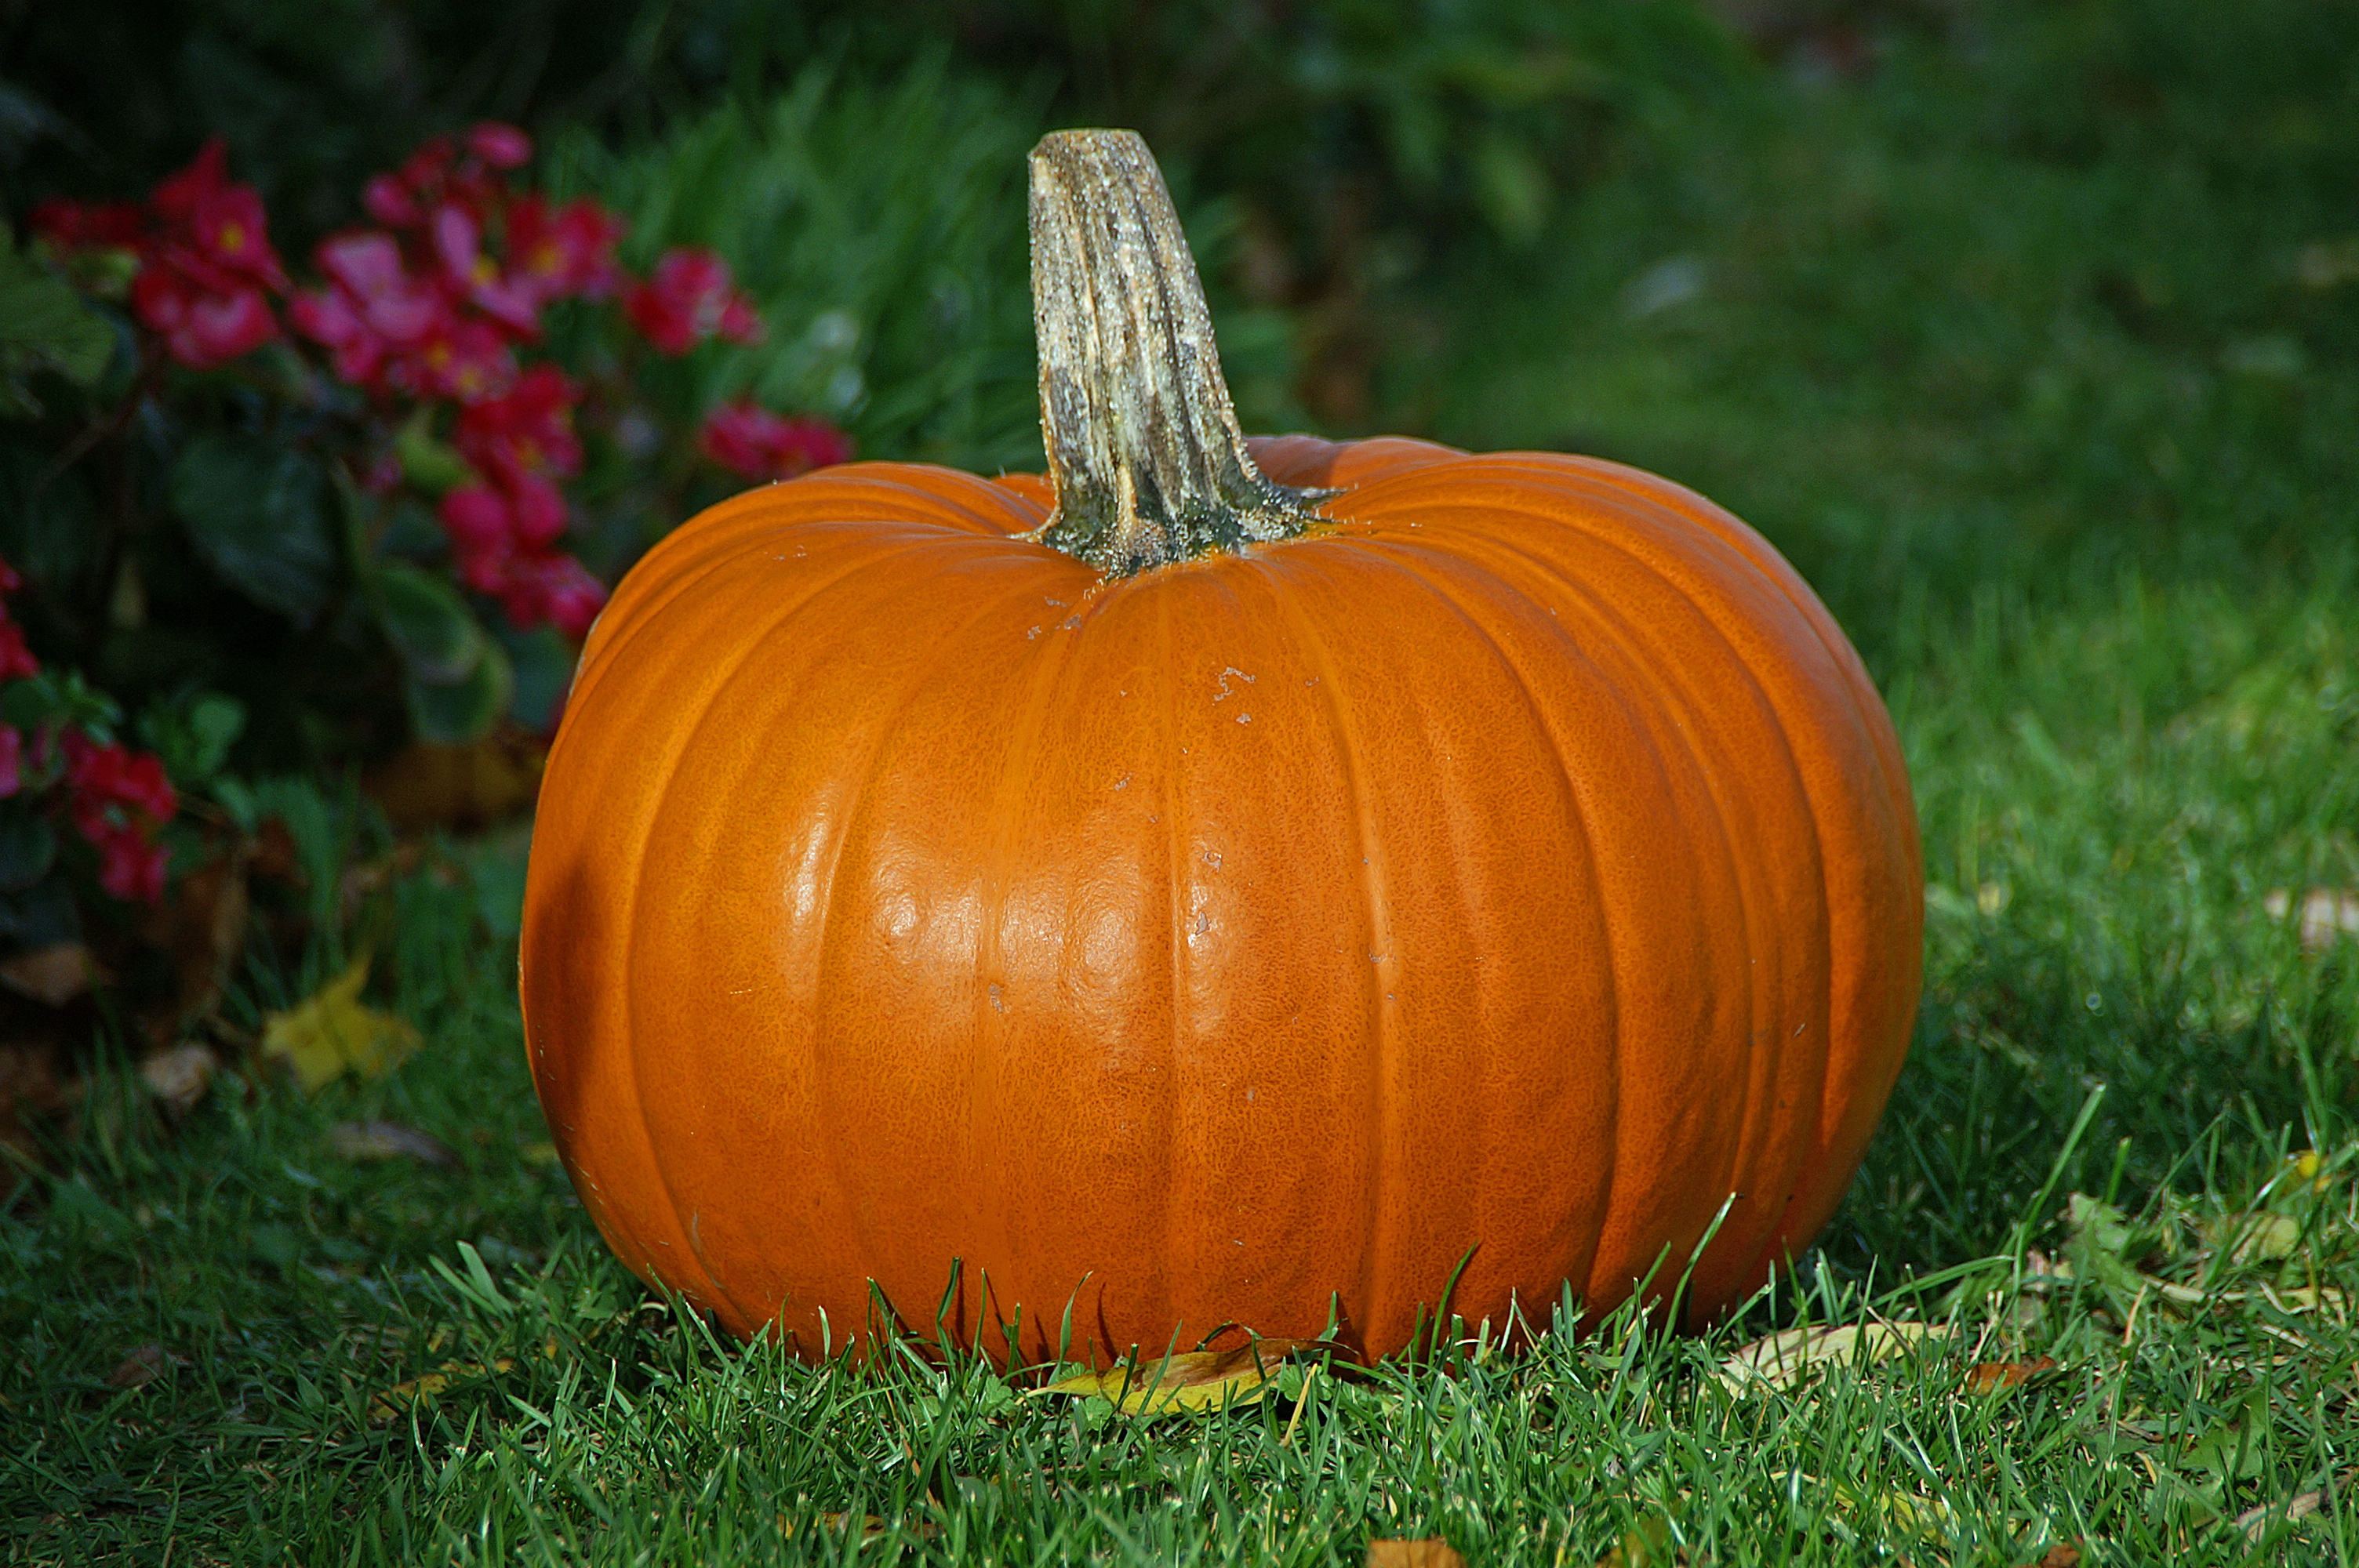 File:Pumpkin.jpg - Wikimedia Commons